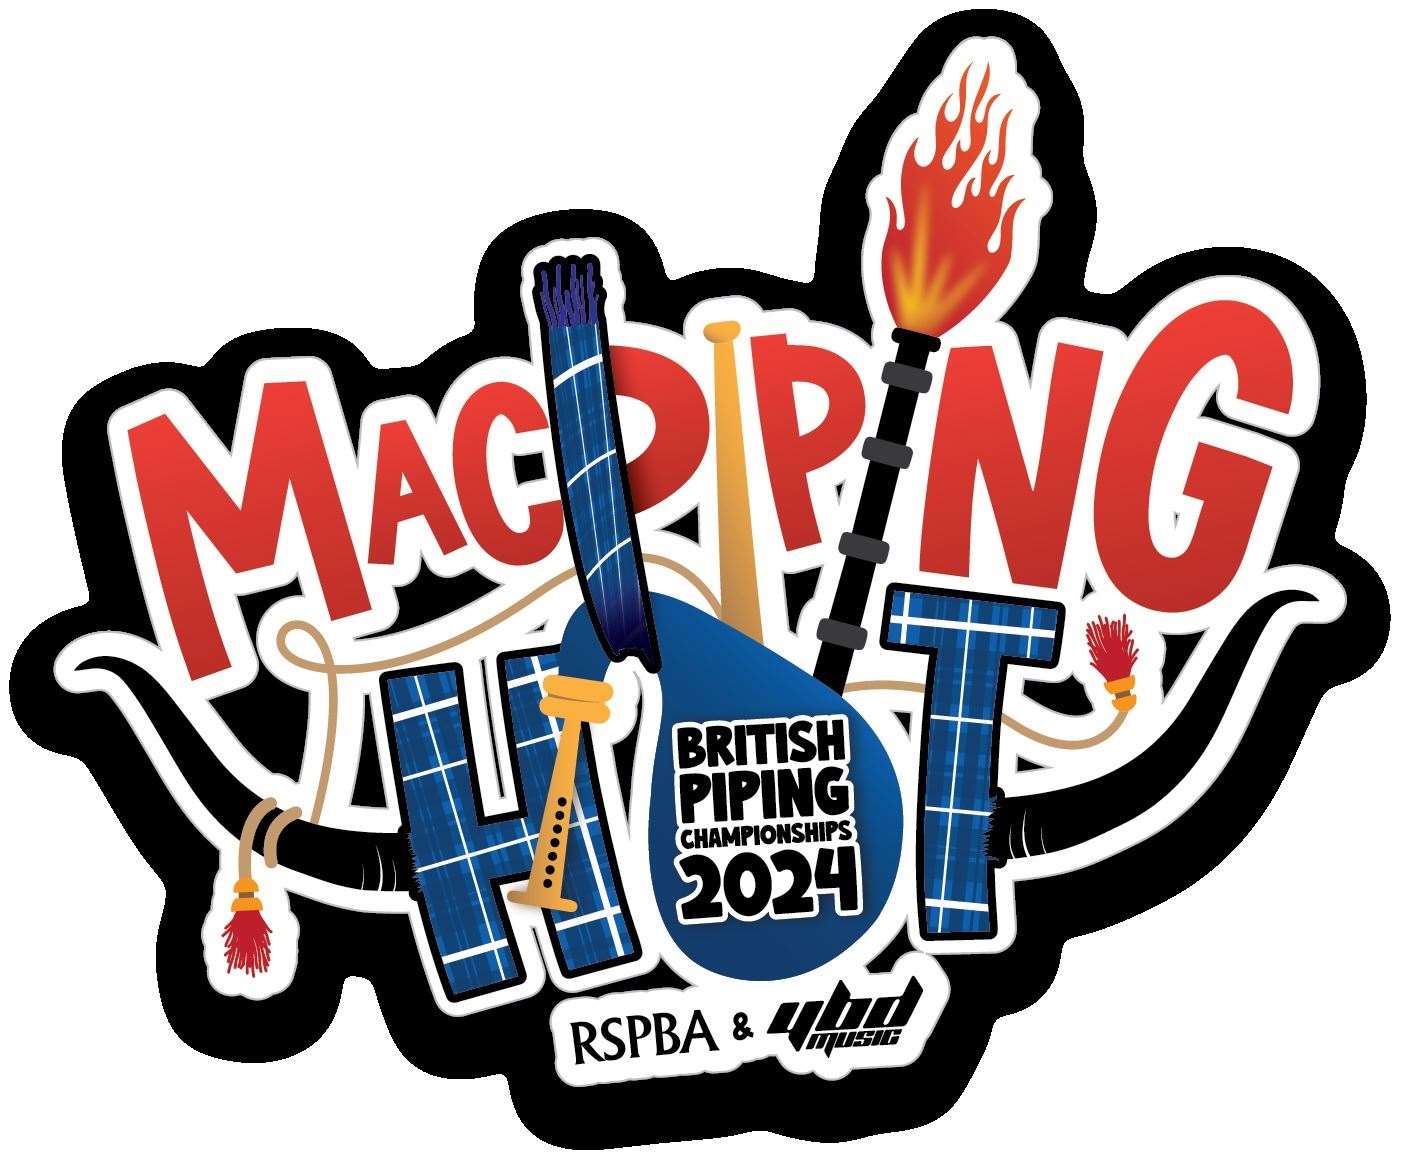 MacPiping Hot Forres' new logo.